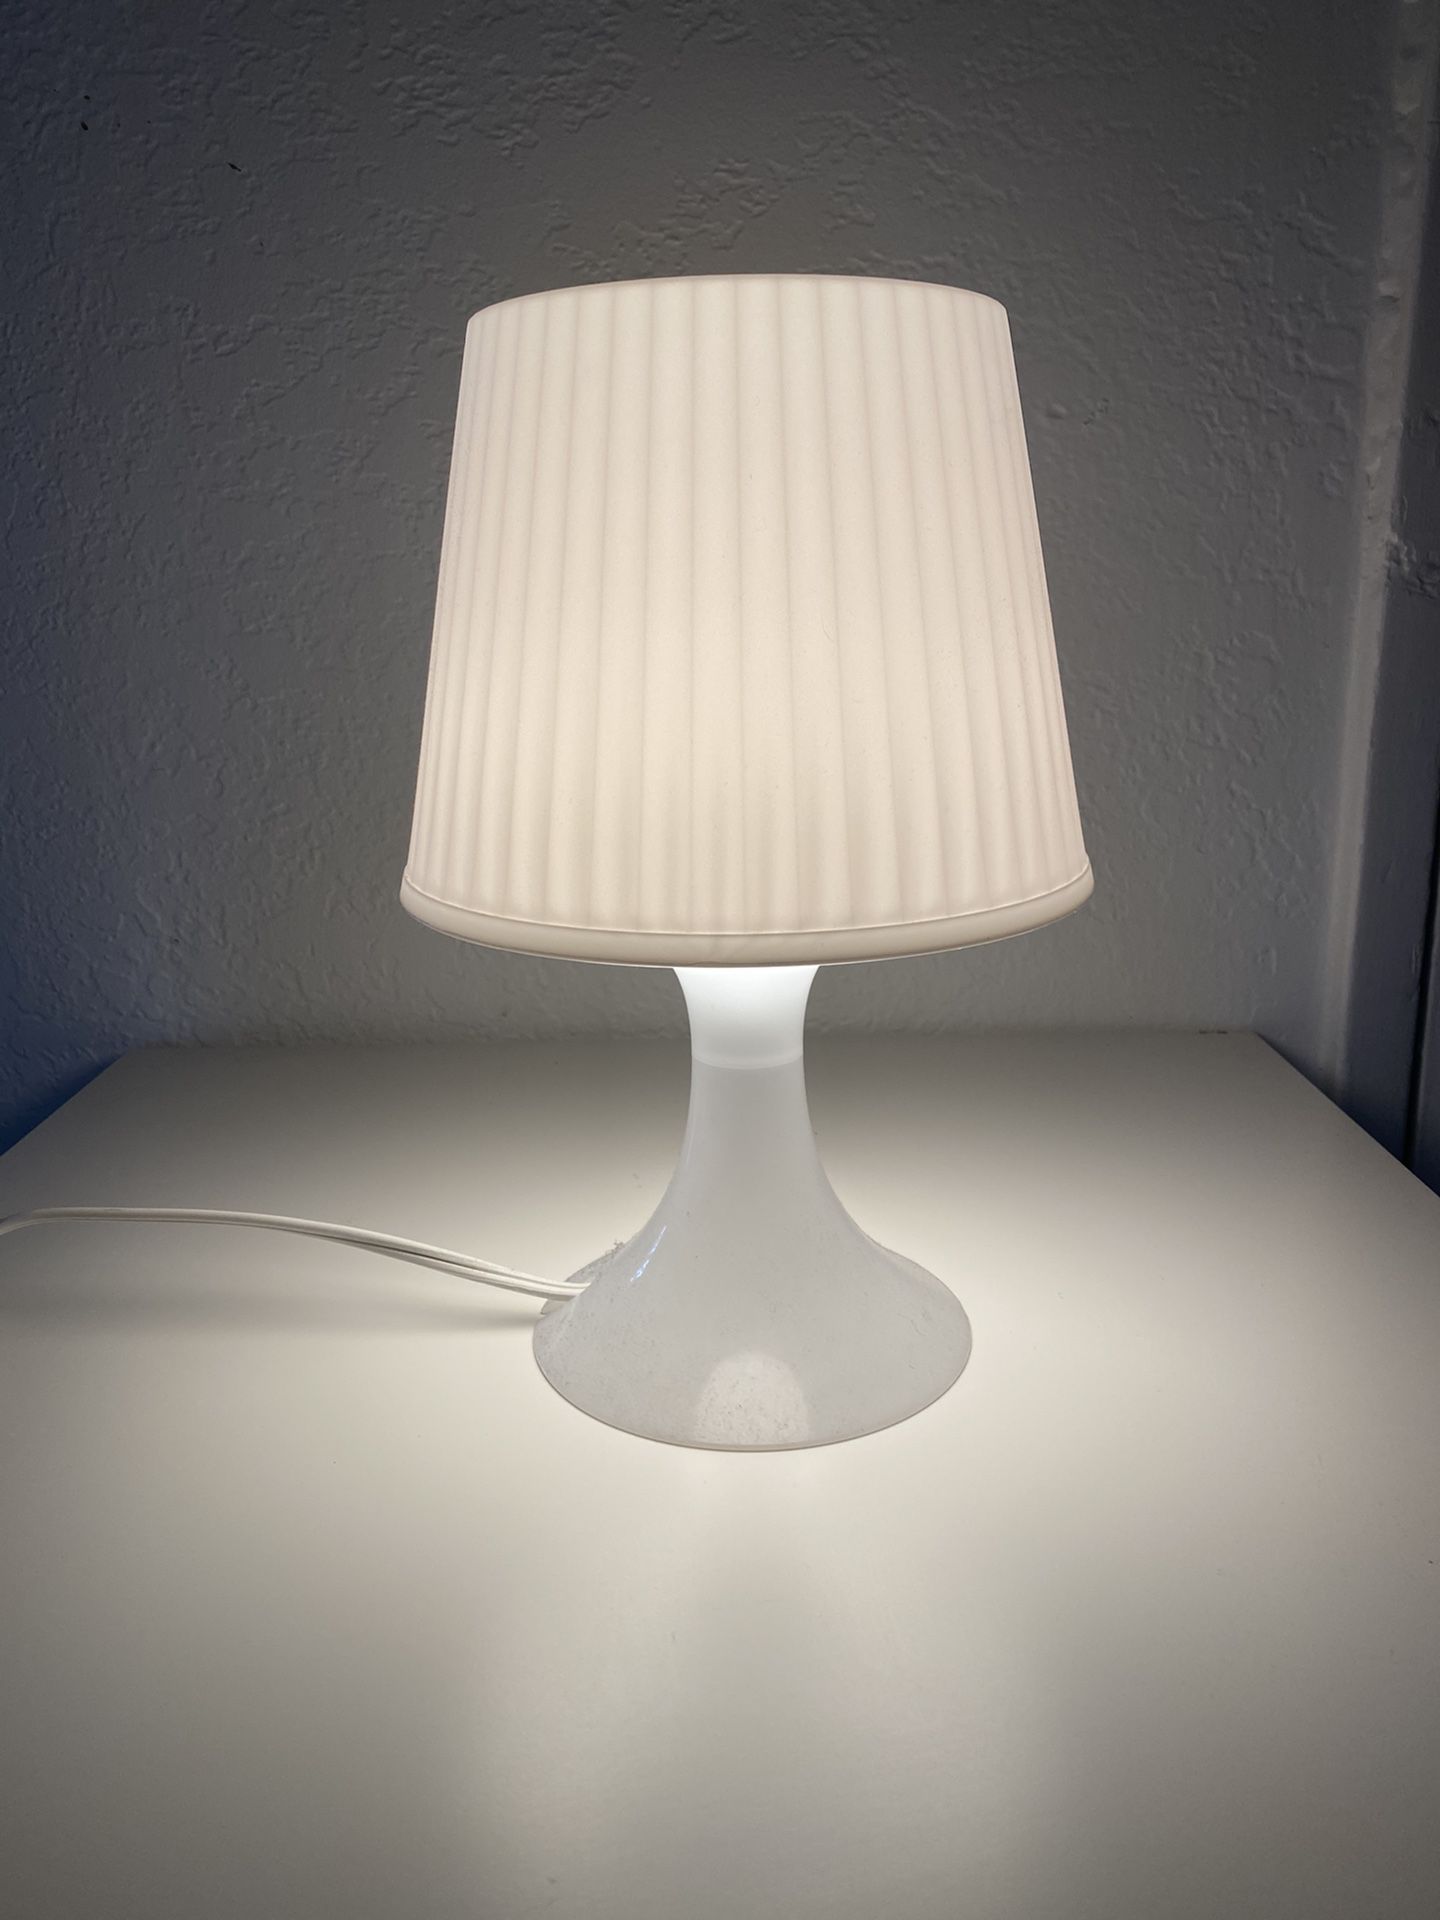 White IKEA lamp